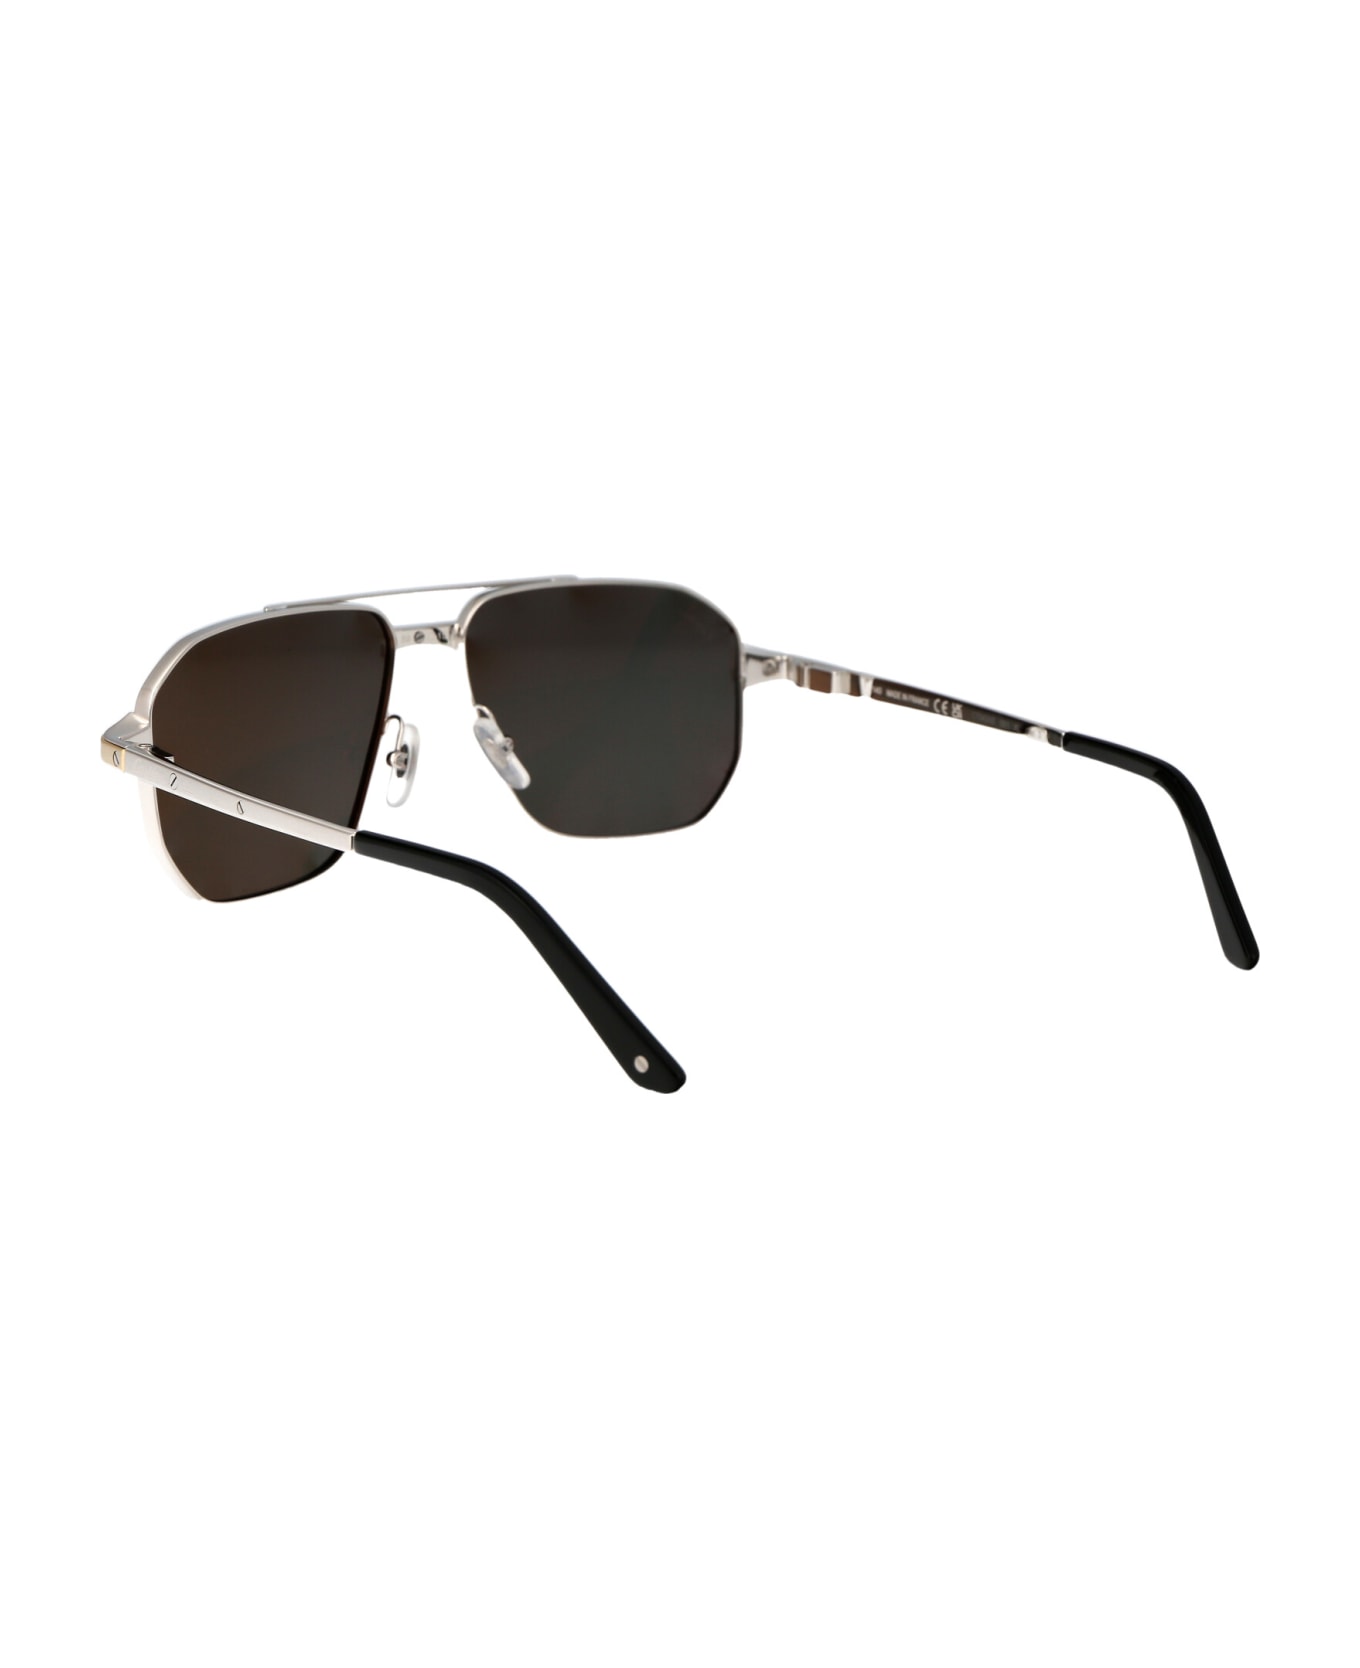 Cartier Eyewear Ct0424s Sunglasses - 001 SILVER SILVER SMOKE サングラス